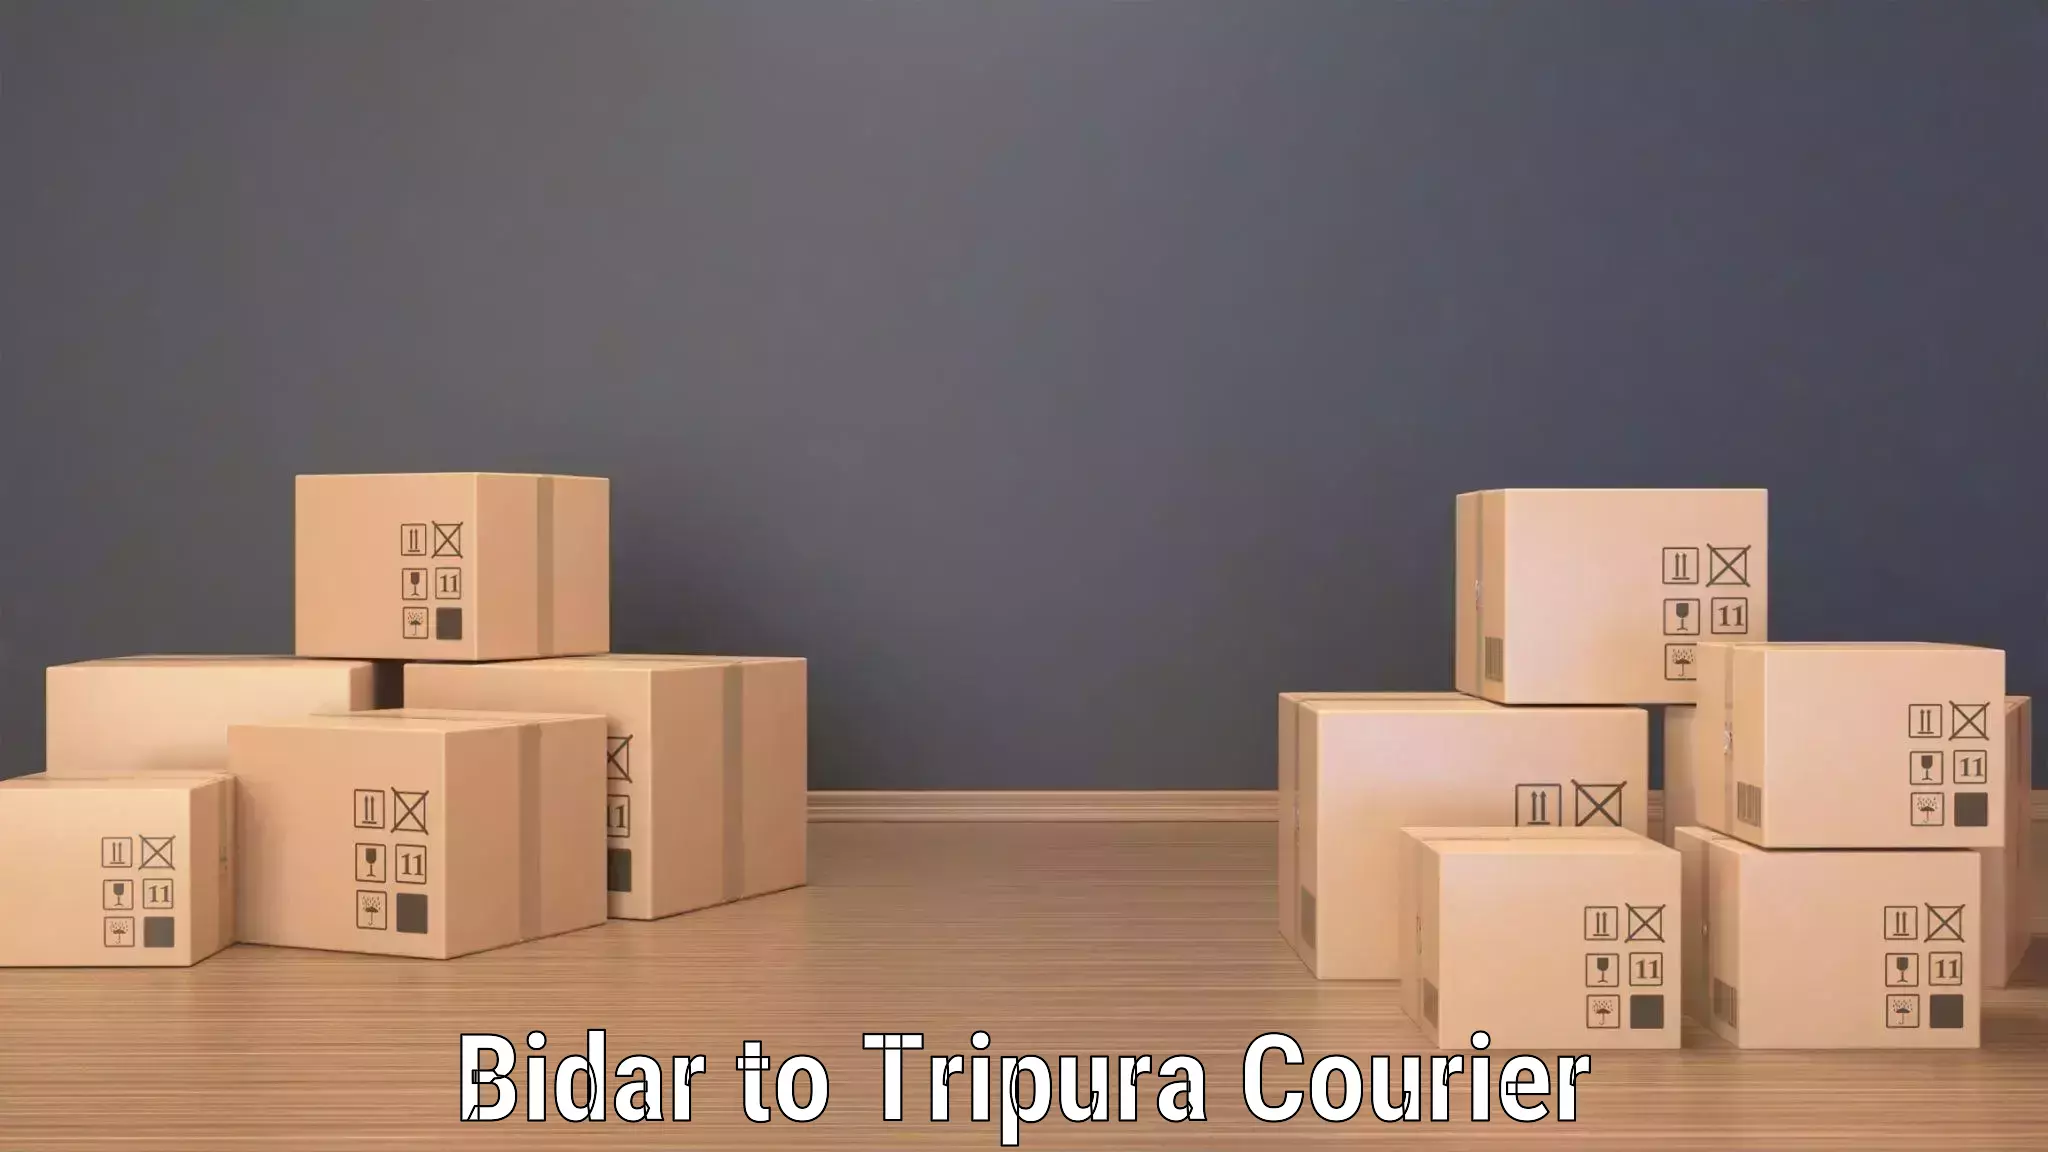 Package delivery network Bidar to Udaipur Tripura